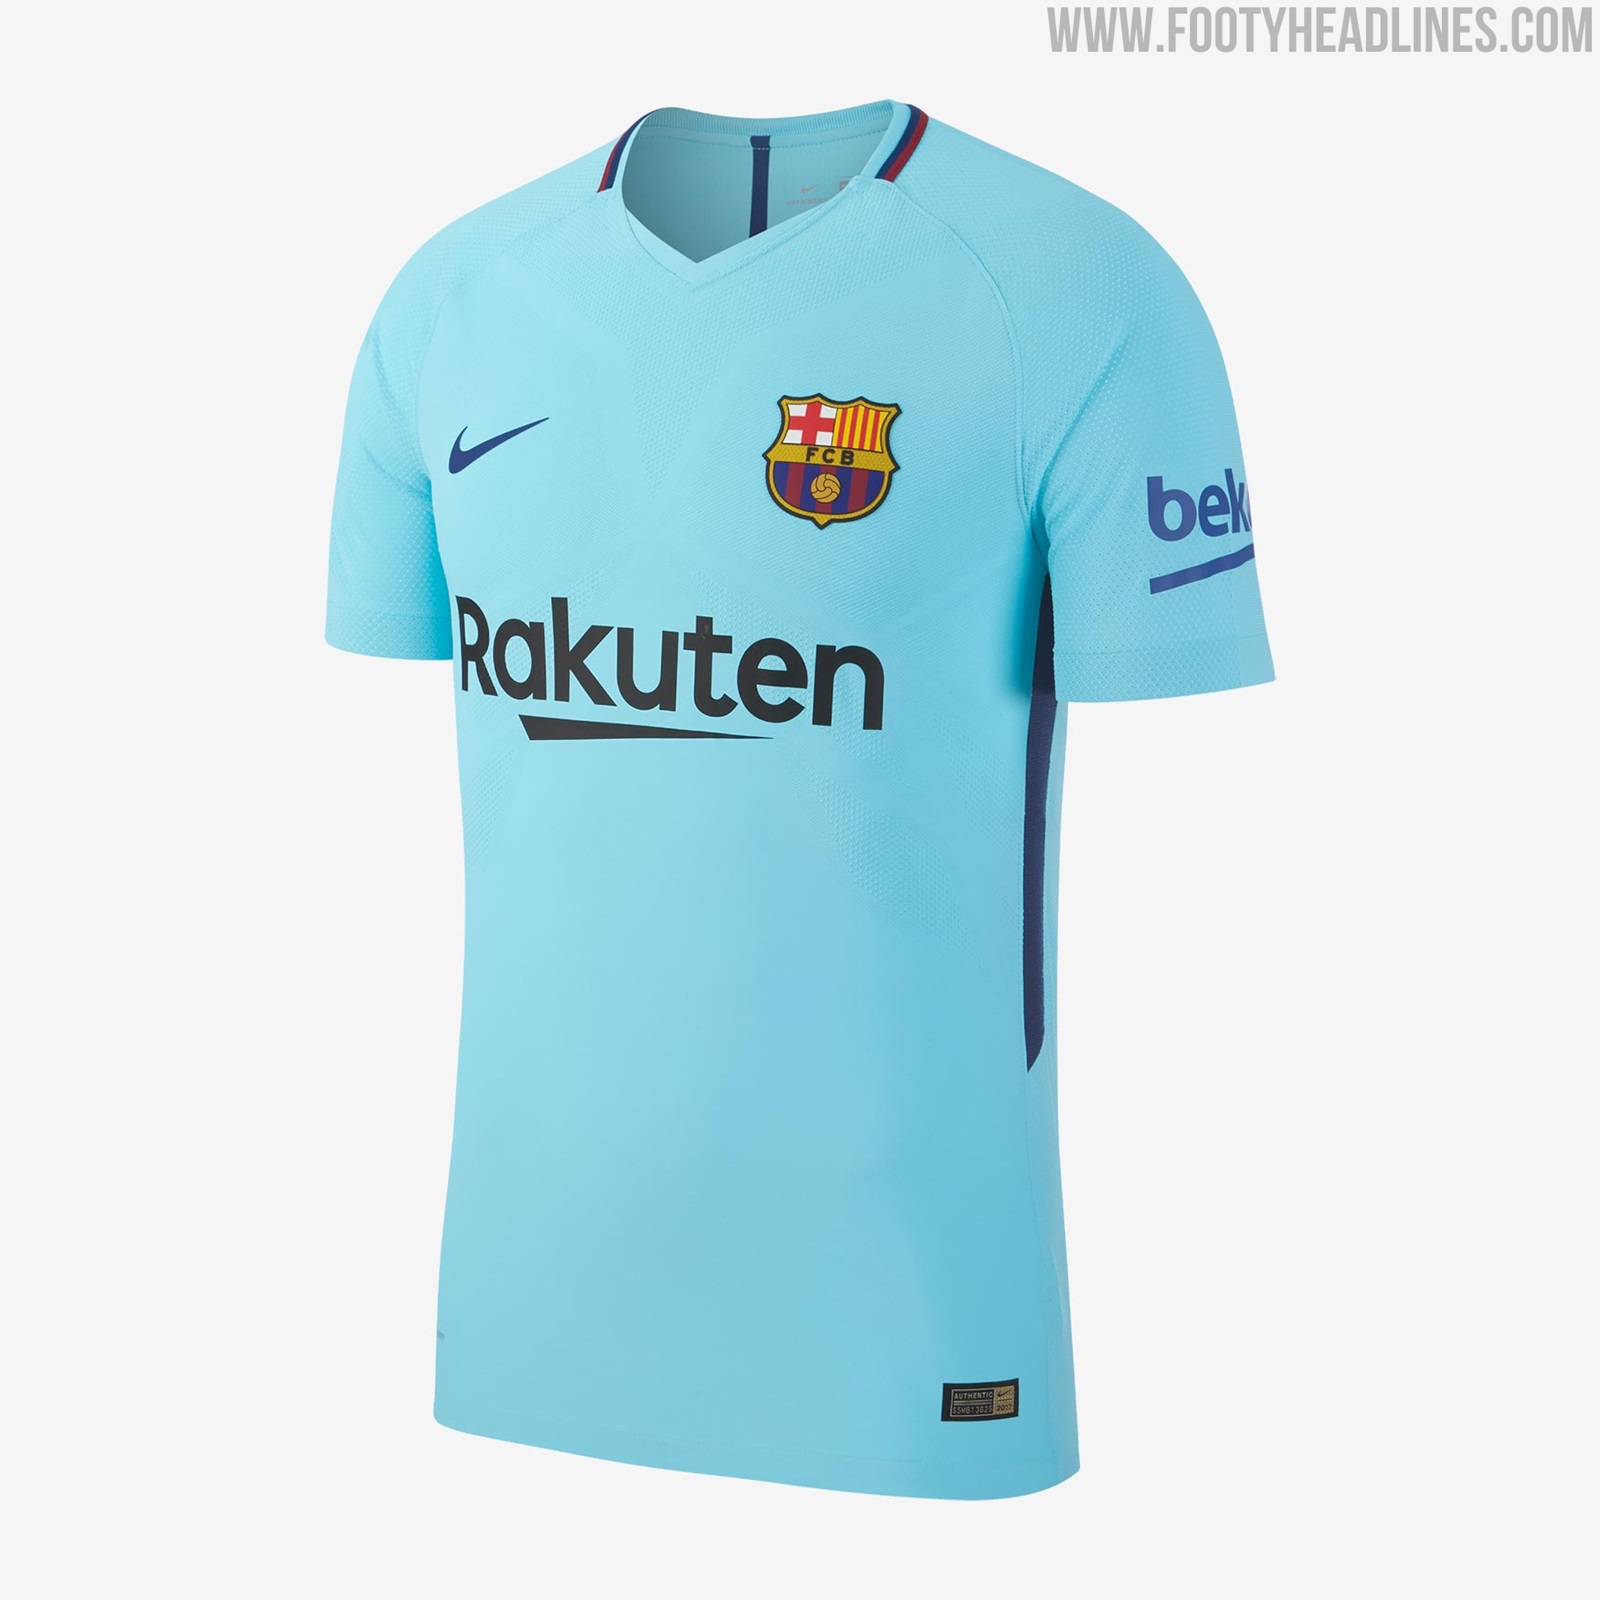 Barcelona 21-22 Away Kit Colors & Design Leaked - Footy Headlines